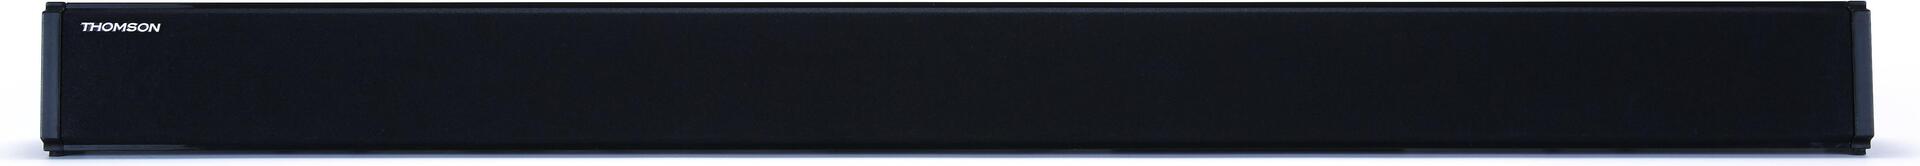 Thomson SB100BT Soundbar Lautsprecher 2.0 Kanäle 90 W Schwarz (TH 348590)  - Onlineshop JACOB Elektronik